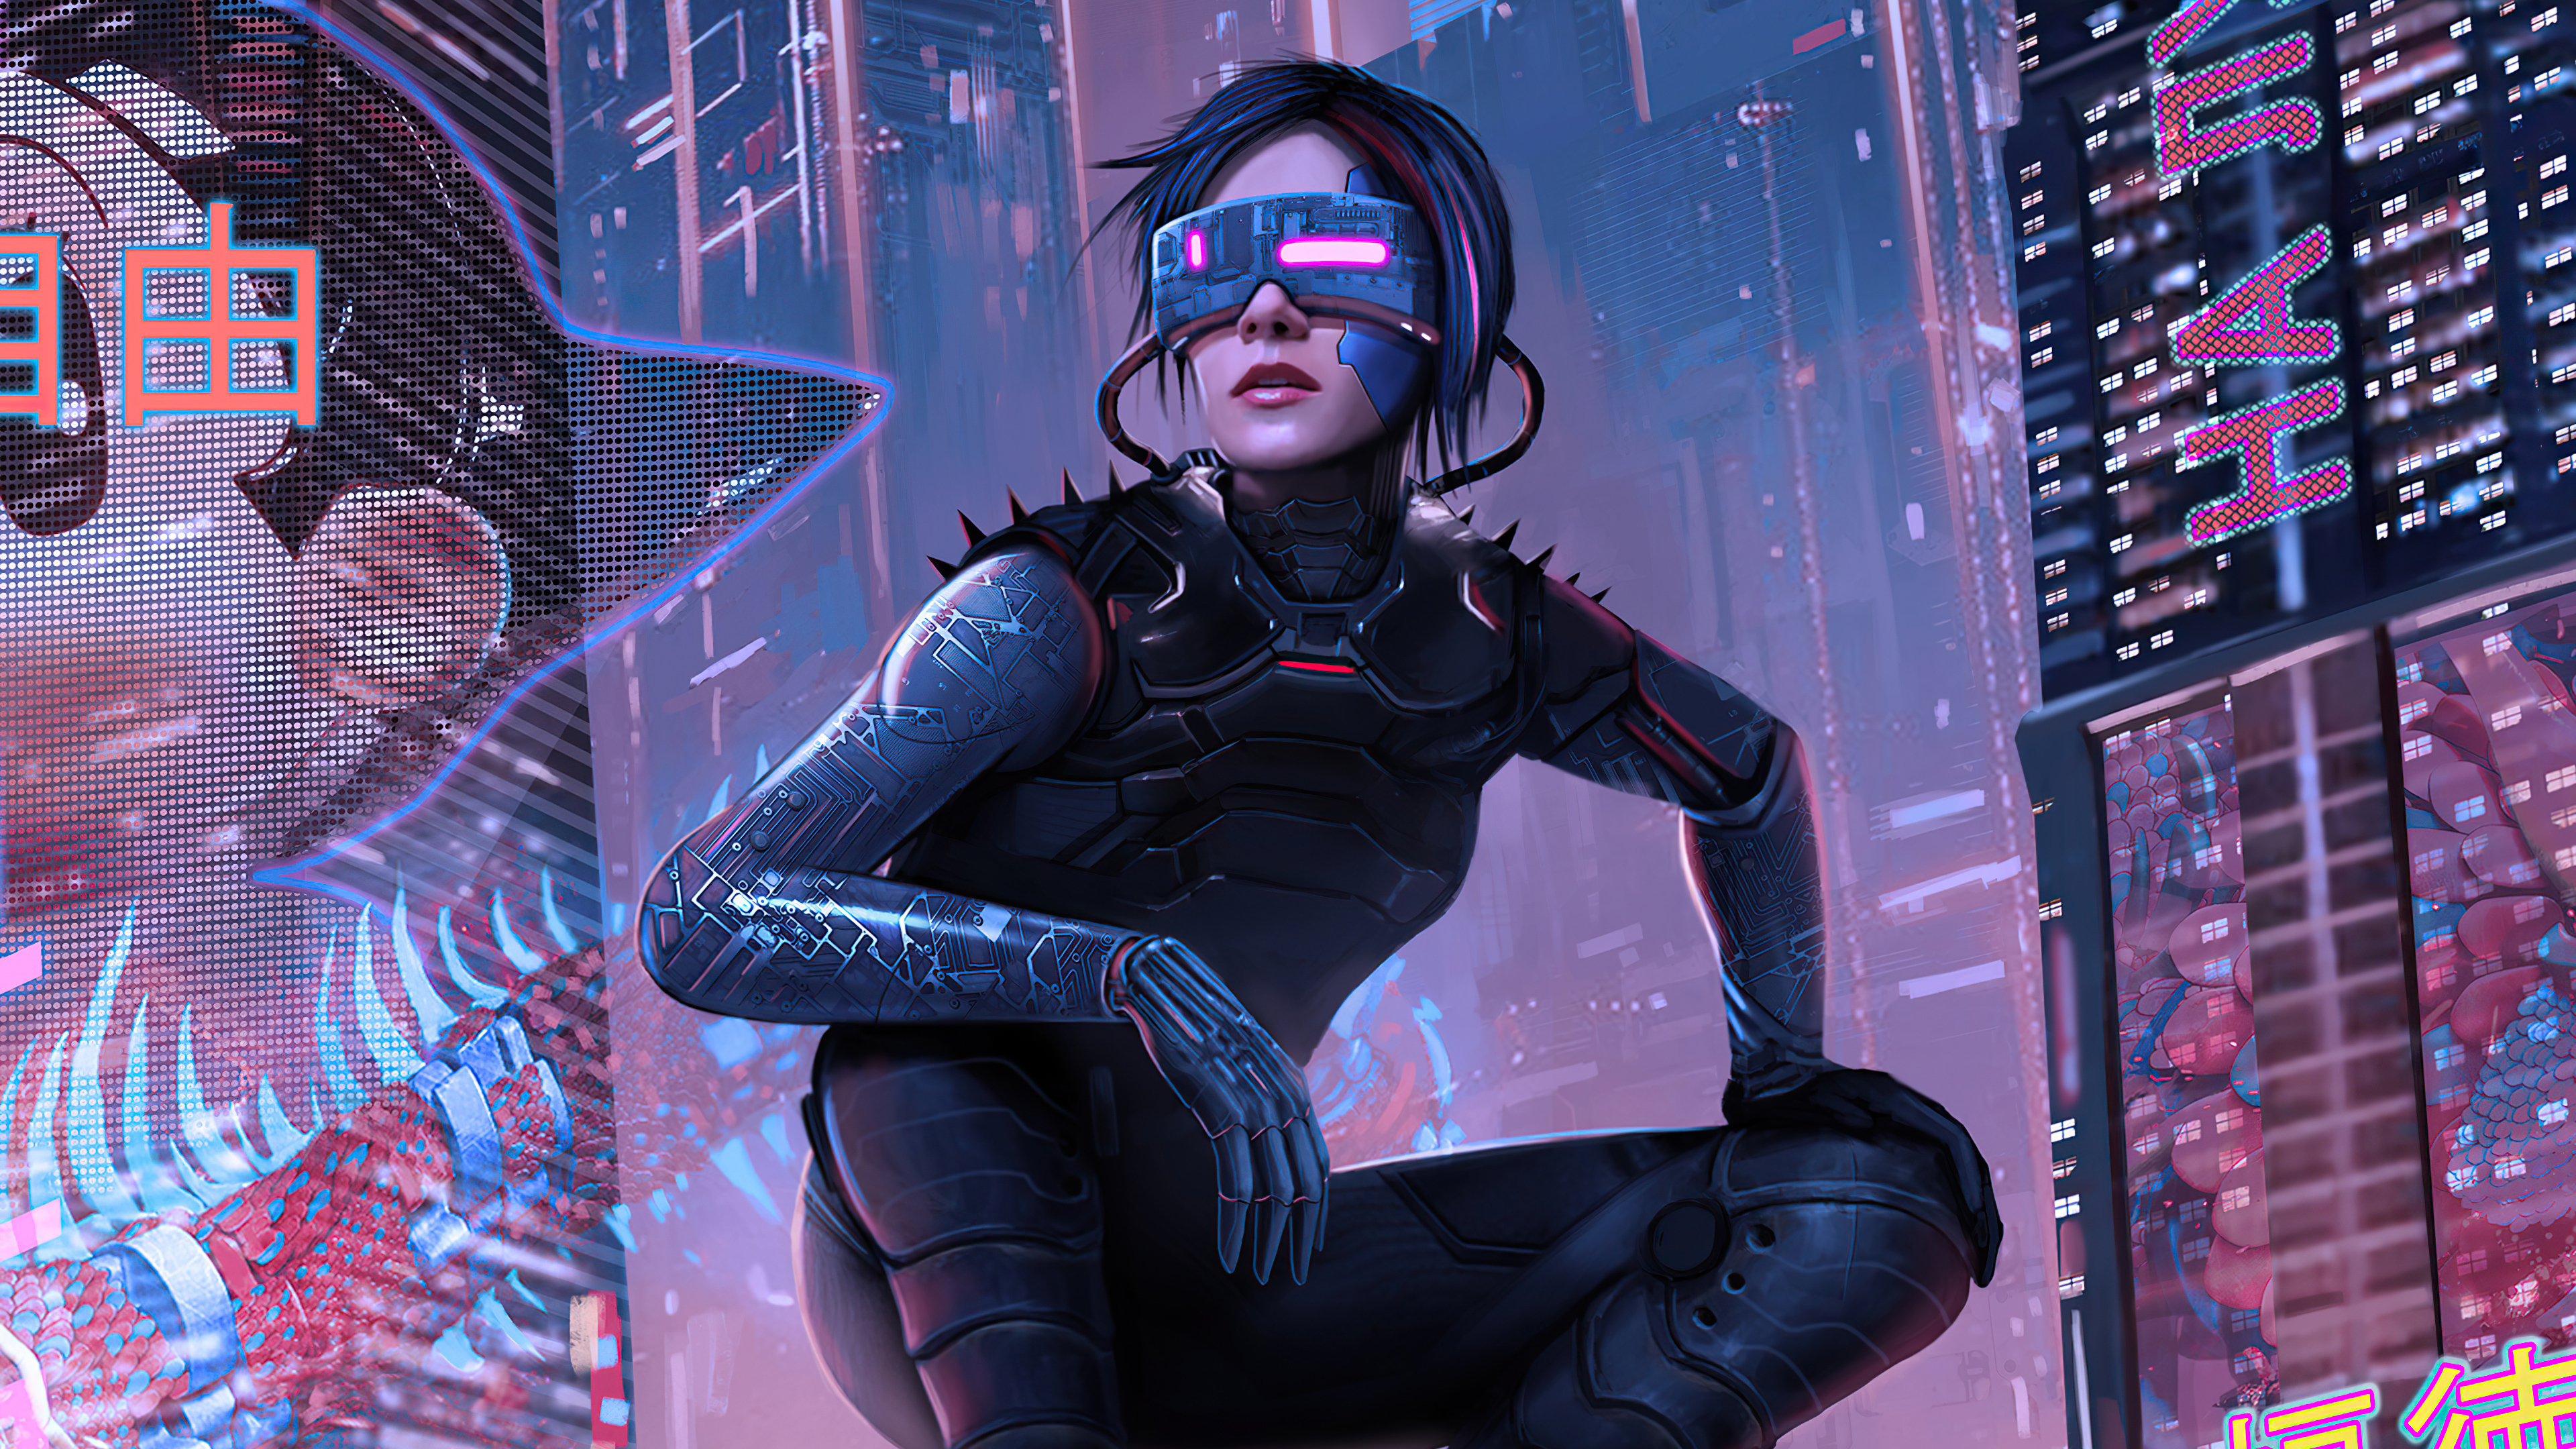 Sci Fi Cyberpunk 4k Woman Wallpaper, HD Artist 4K Wallpapers, Images,  Photos and Background - Wallpapers Den